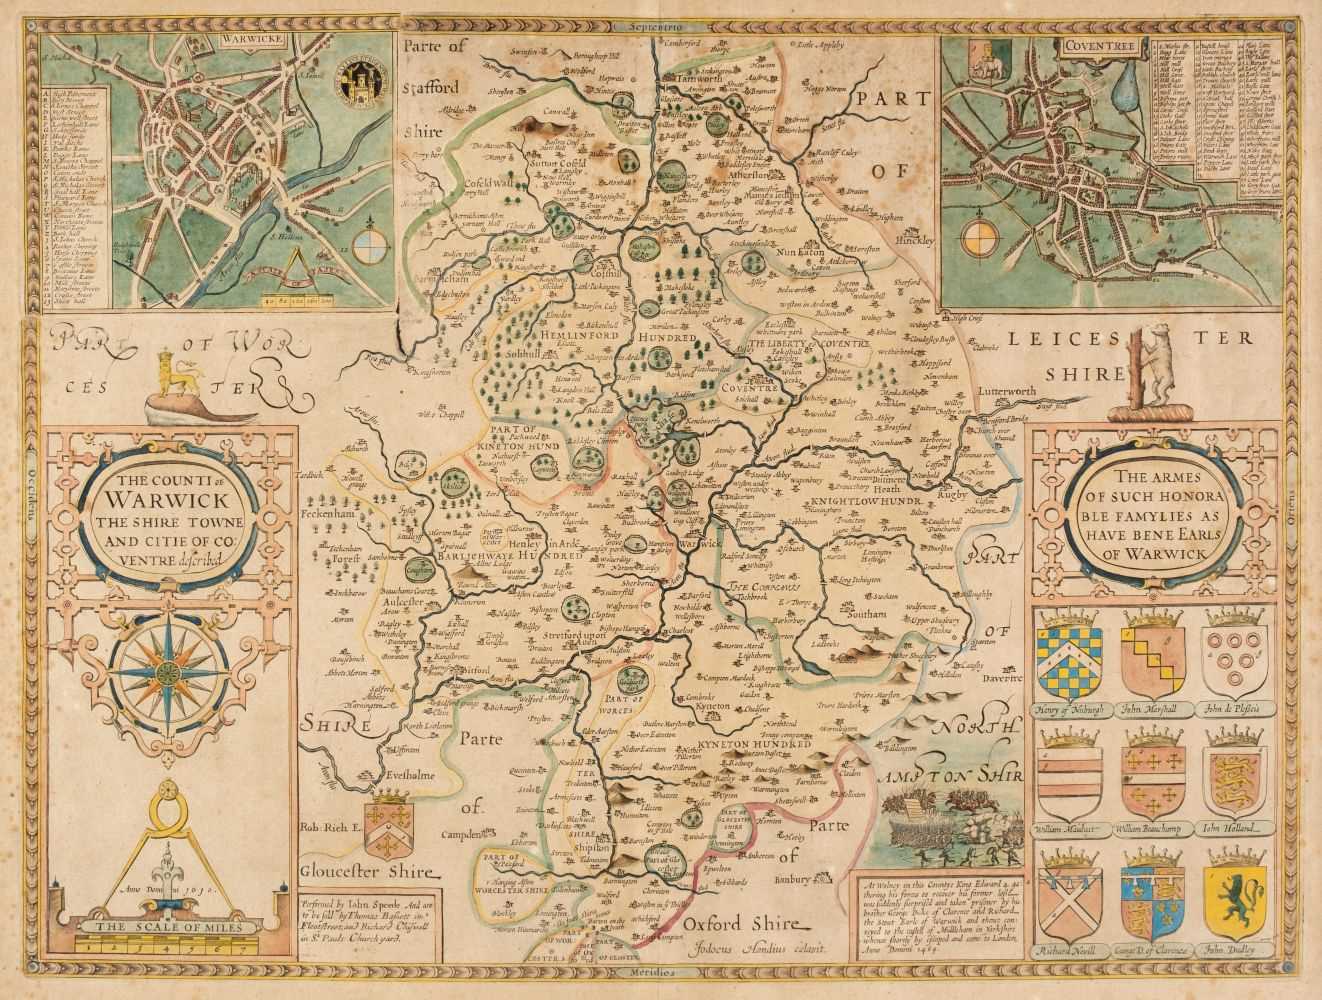 Lot 135 - Warwickshire. Speed (J.), The Counti of Warwick..., Thomas Bassett & Richard Chiswell, 1676